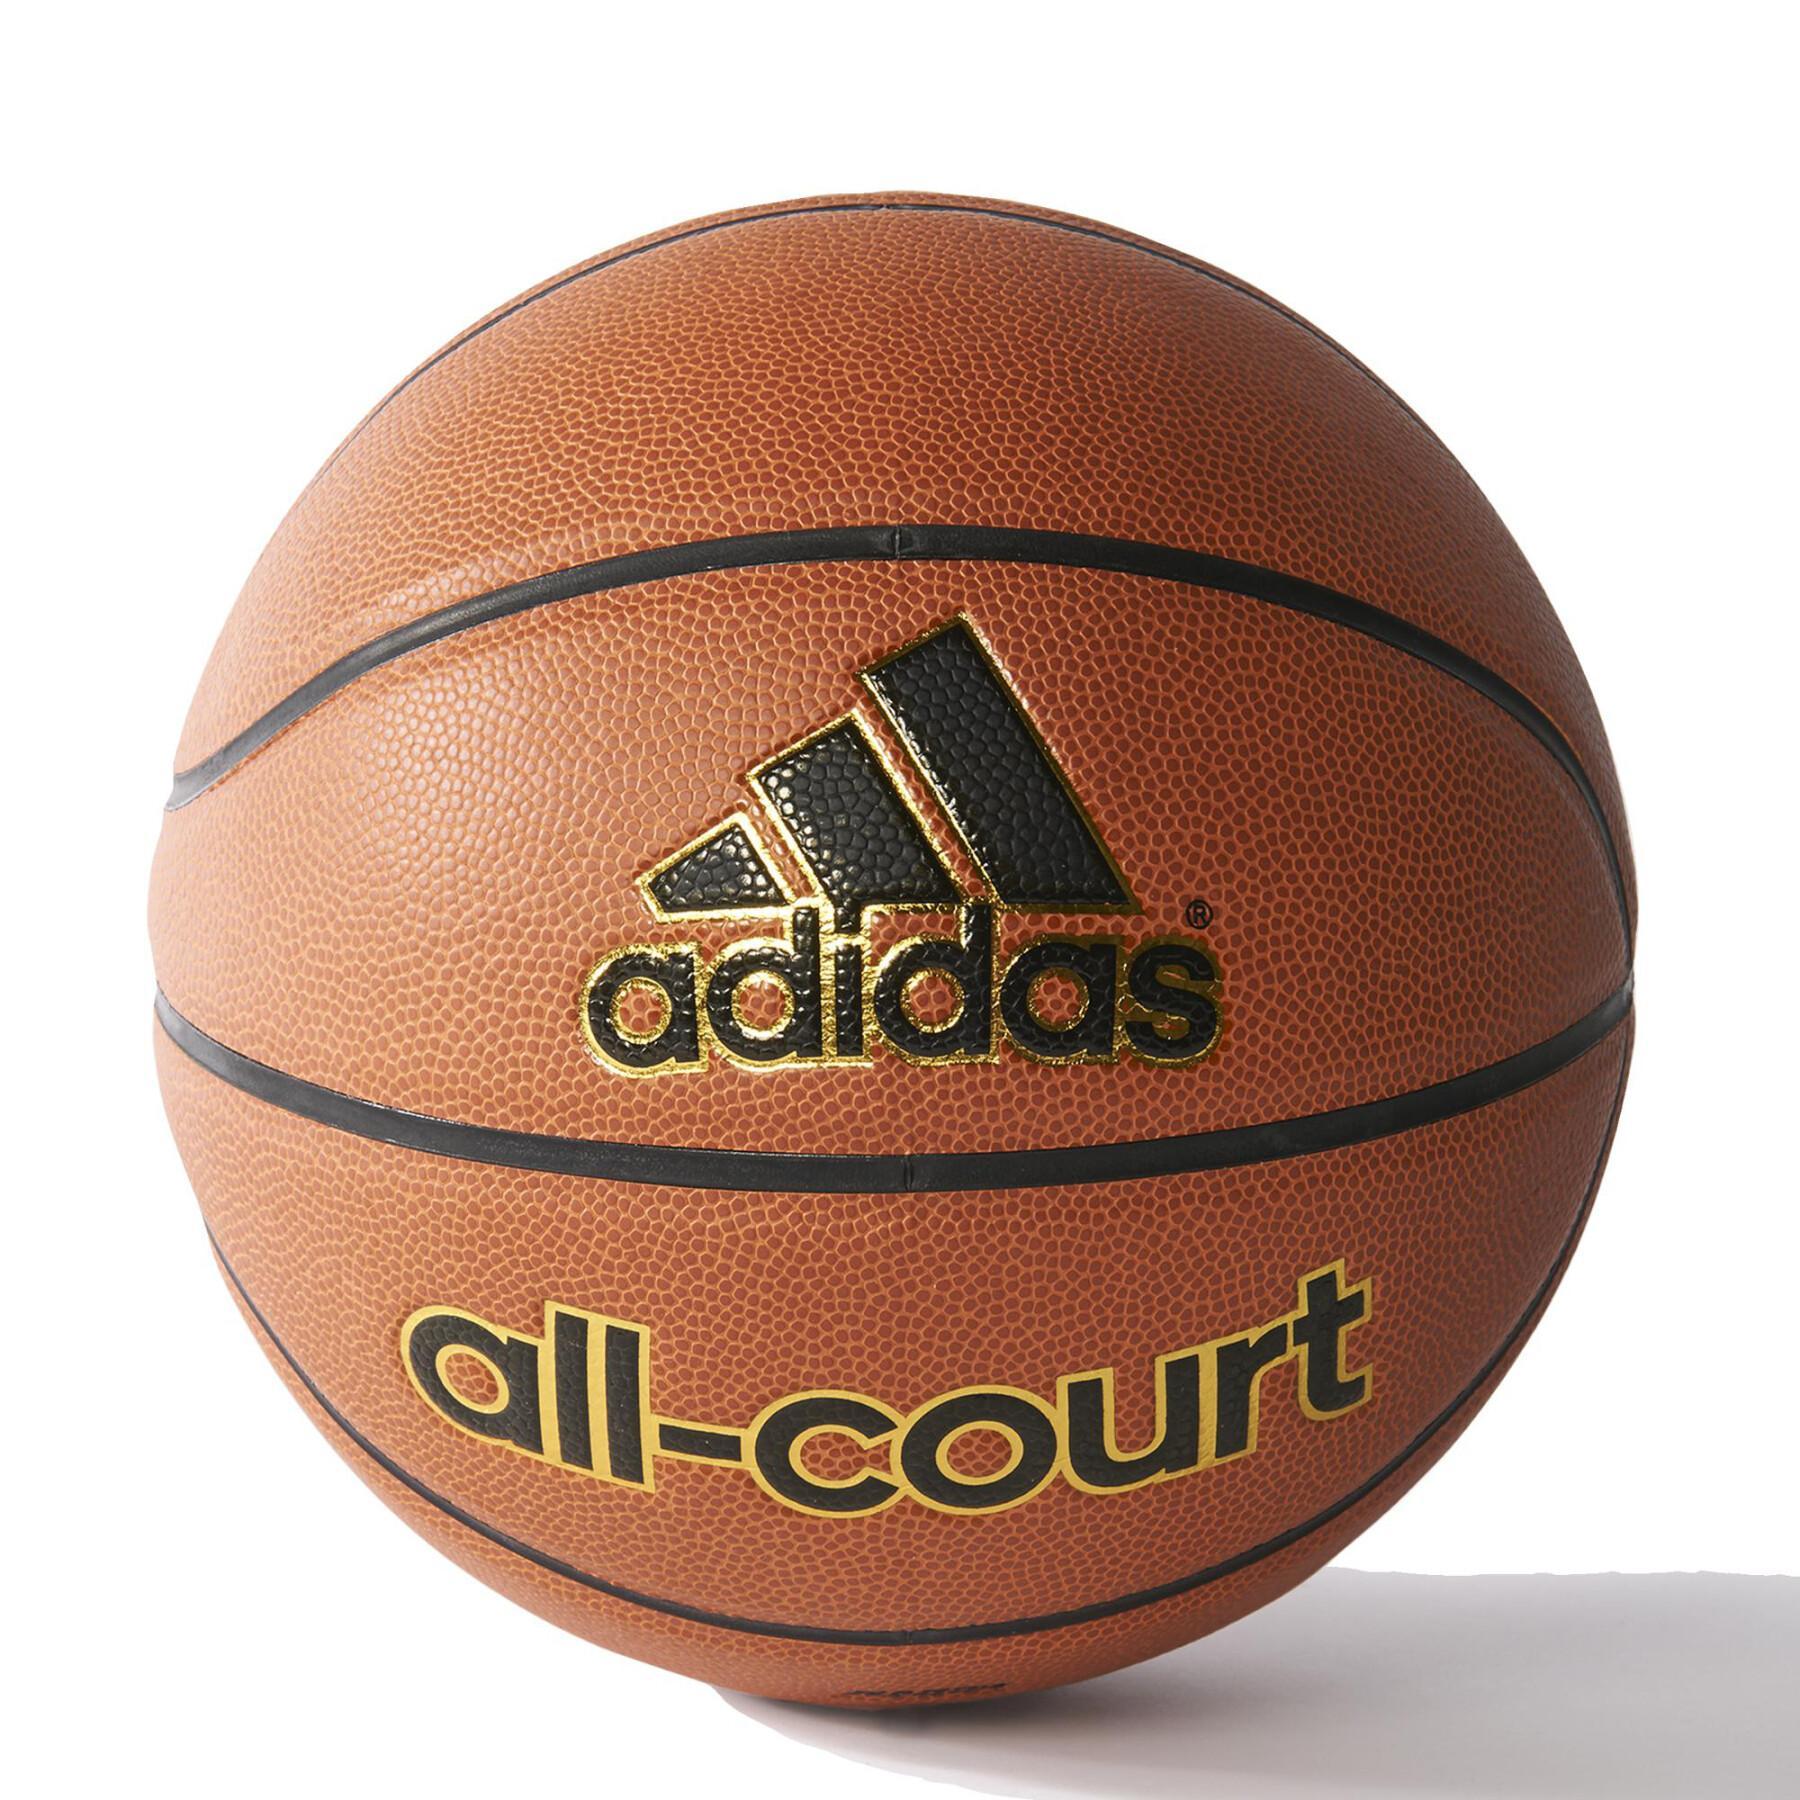 Baloncesto adidas All-Court